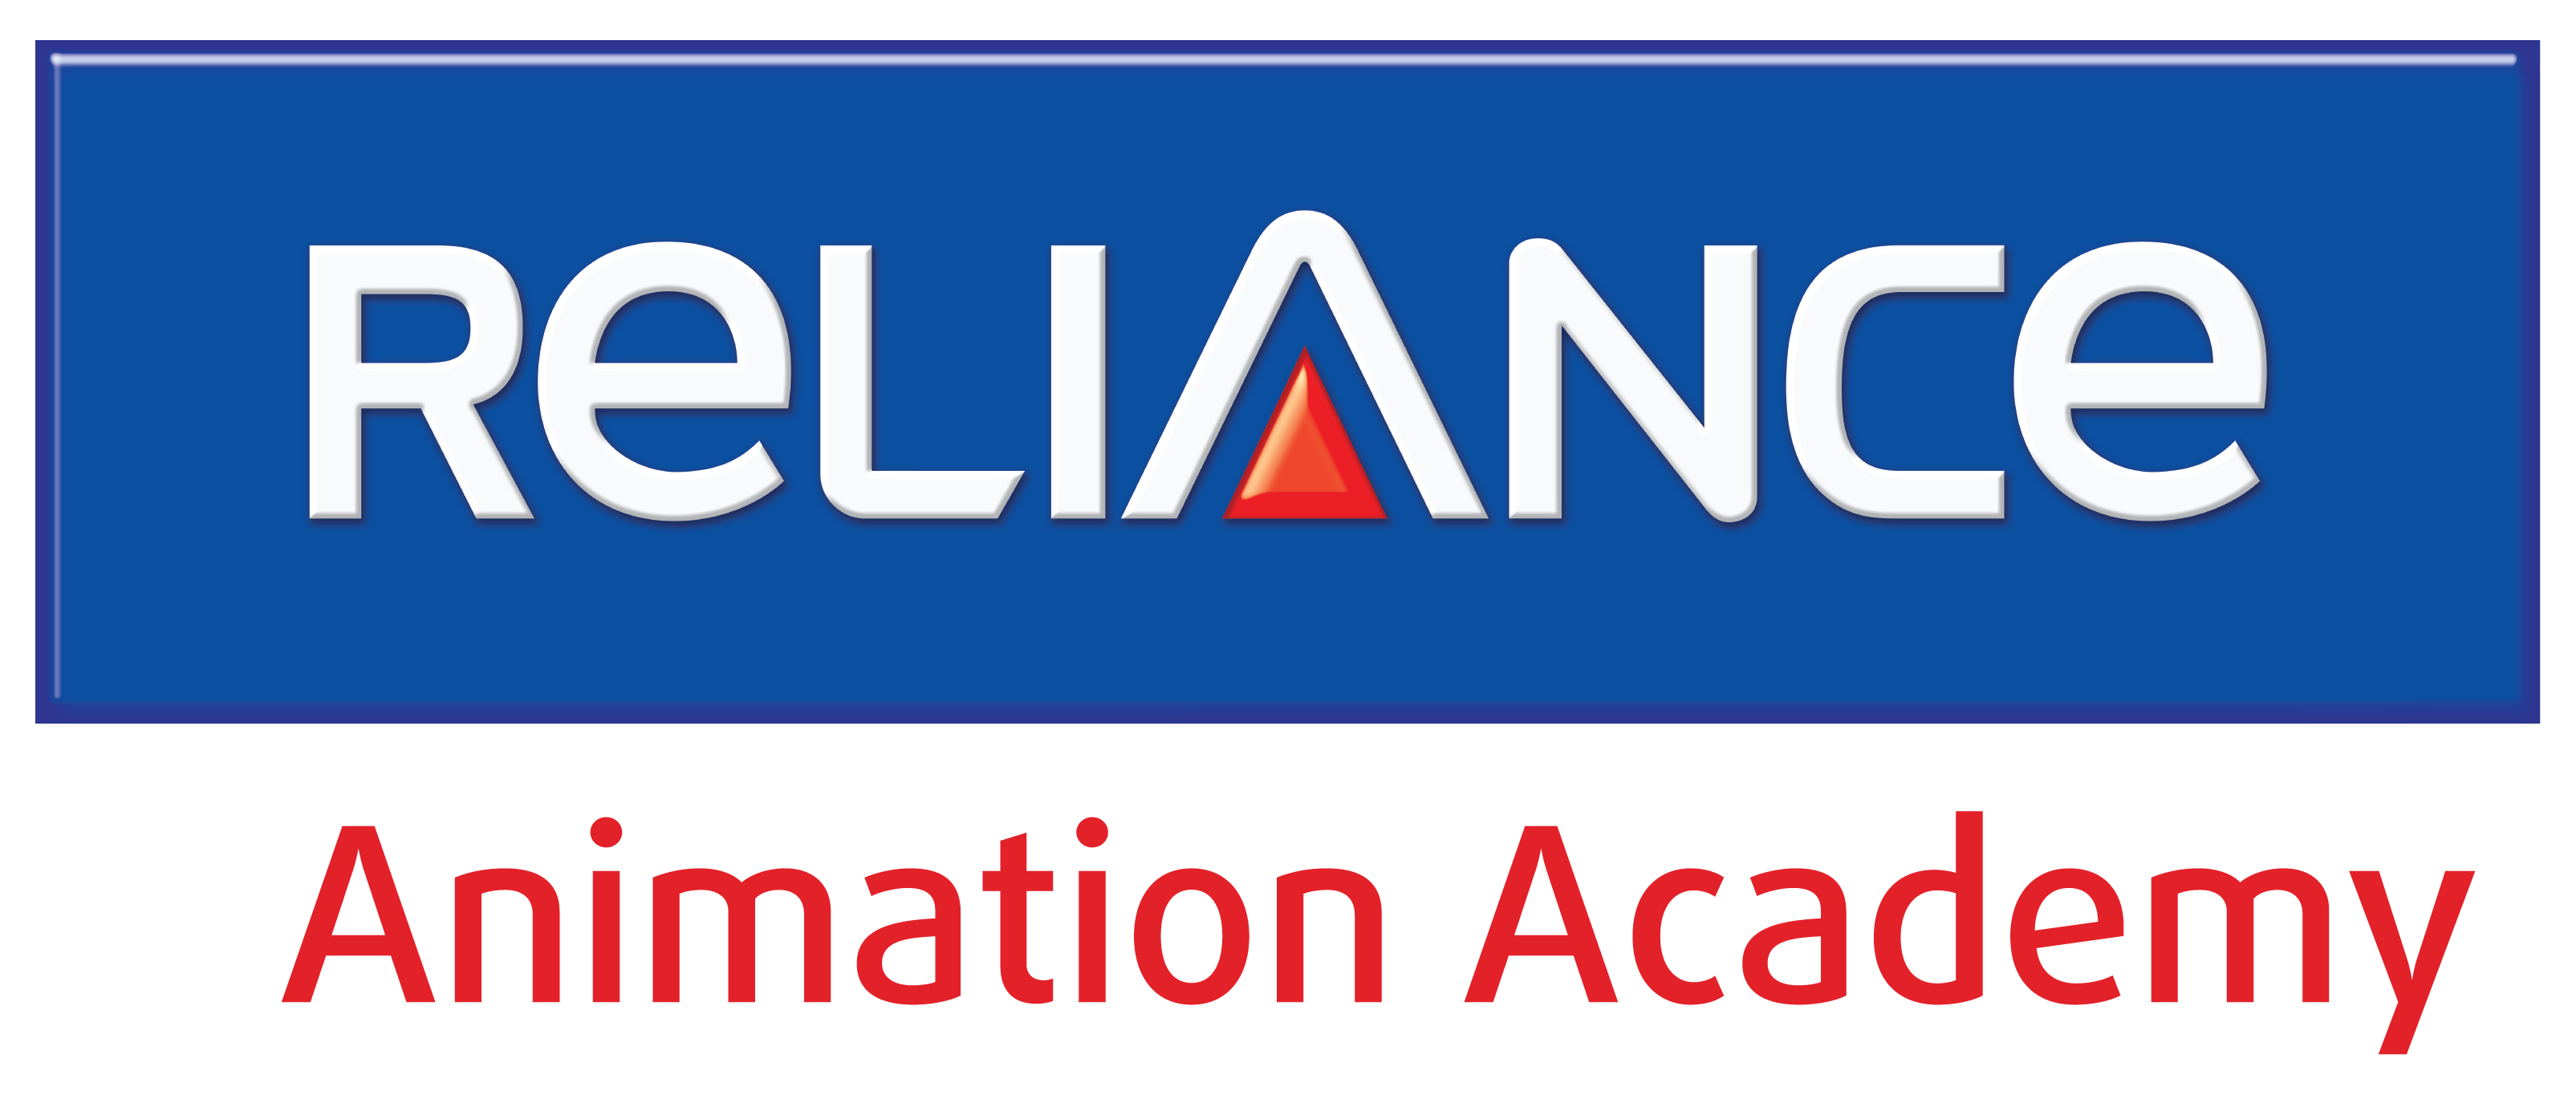 Reliance Animation Academy Varanasi - Logo